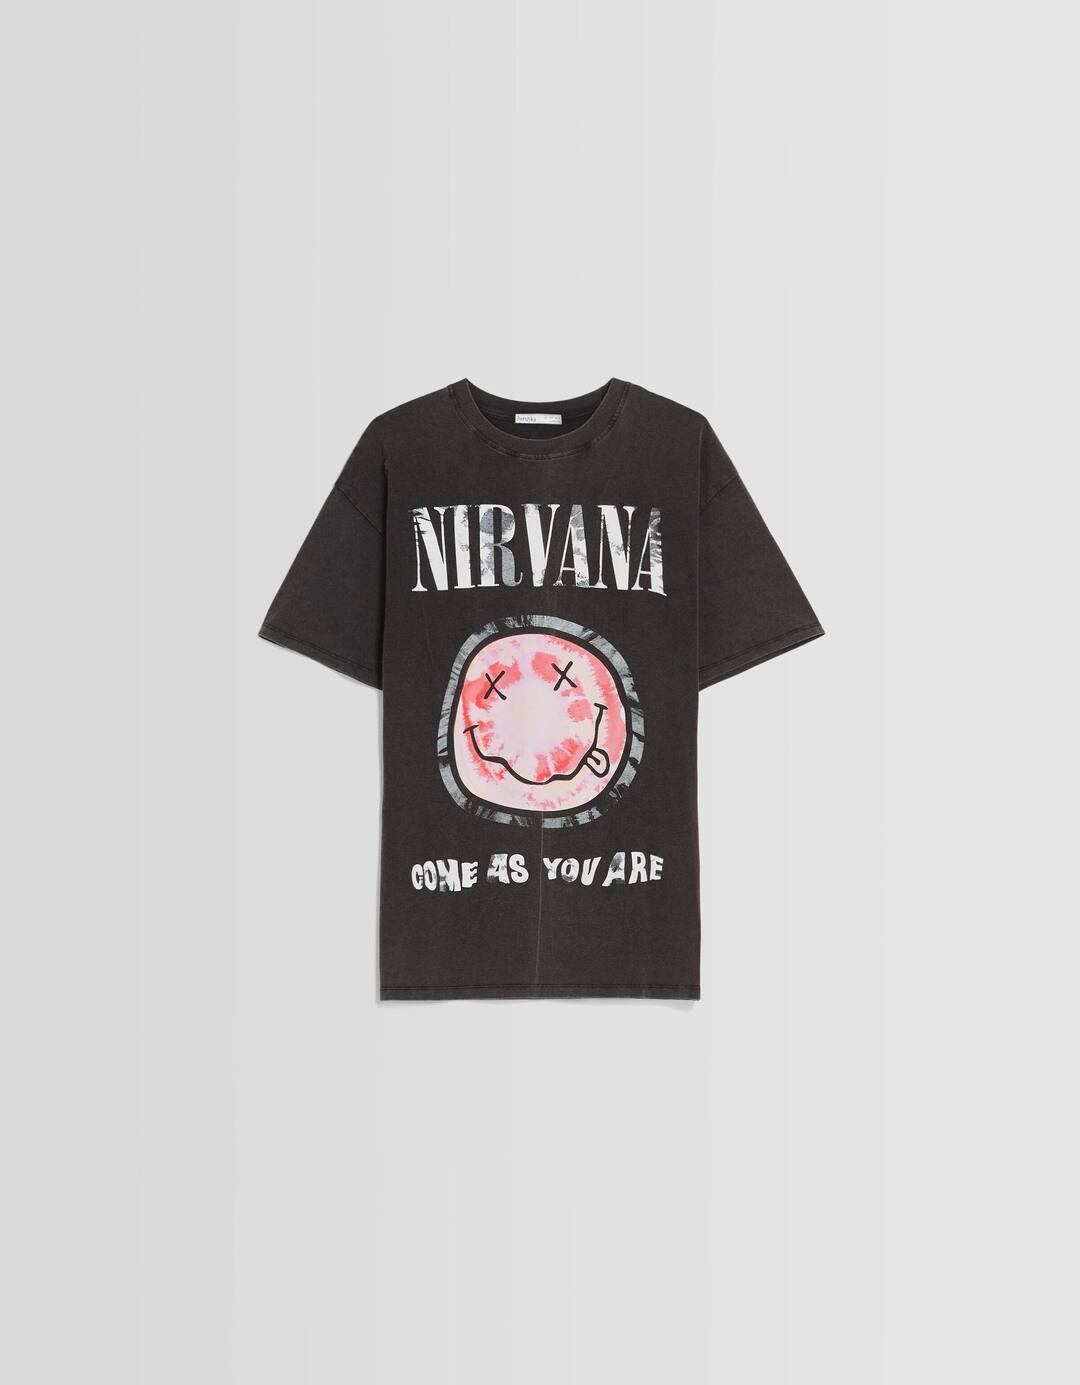 Kaus Nirvana oversize lengan pendek bergambar